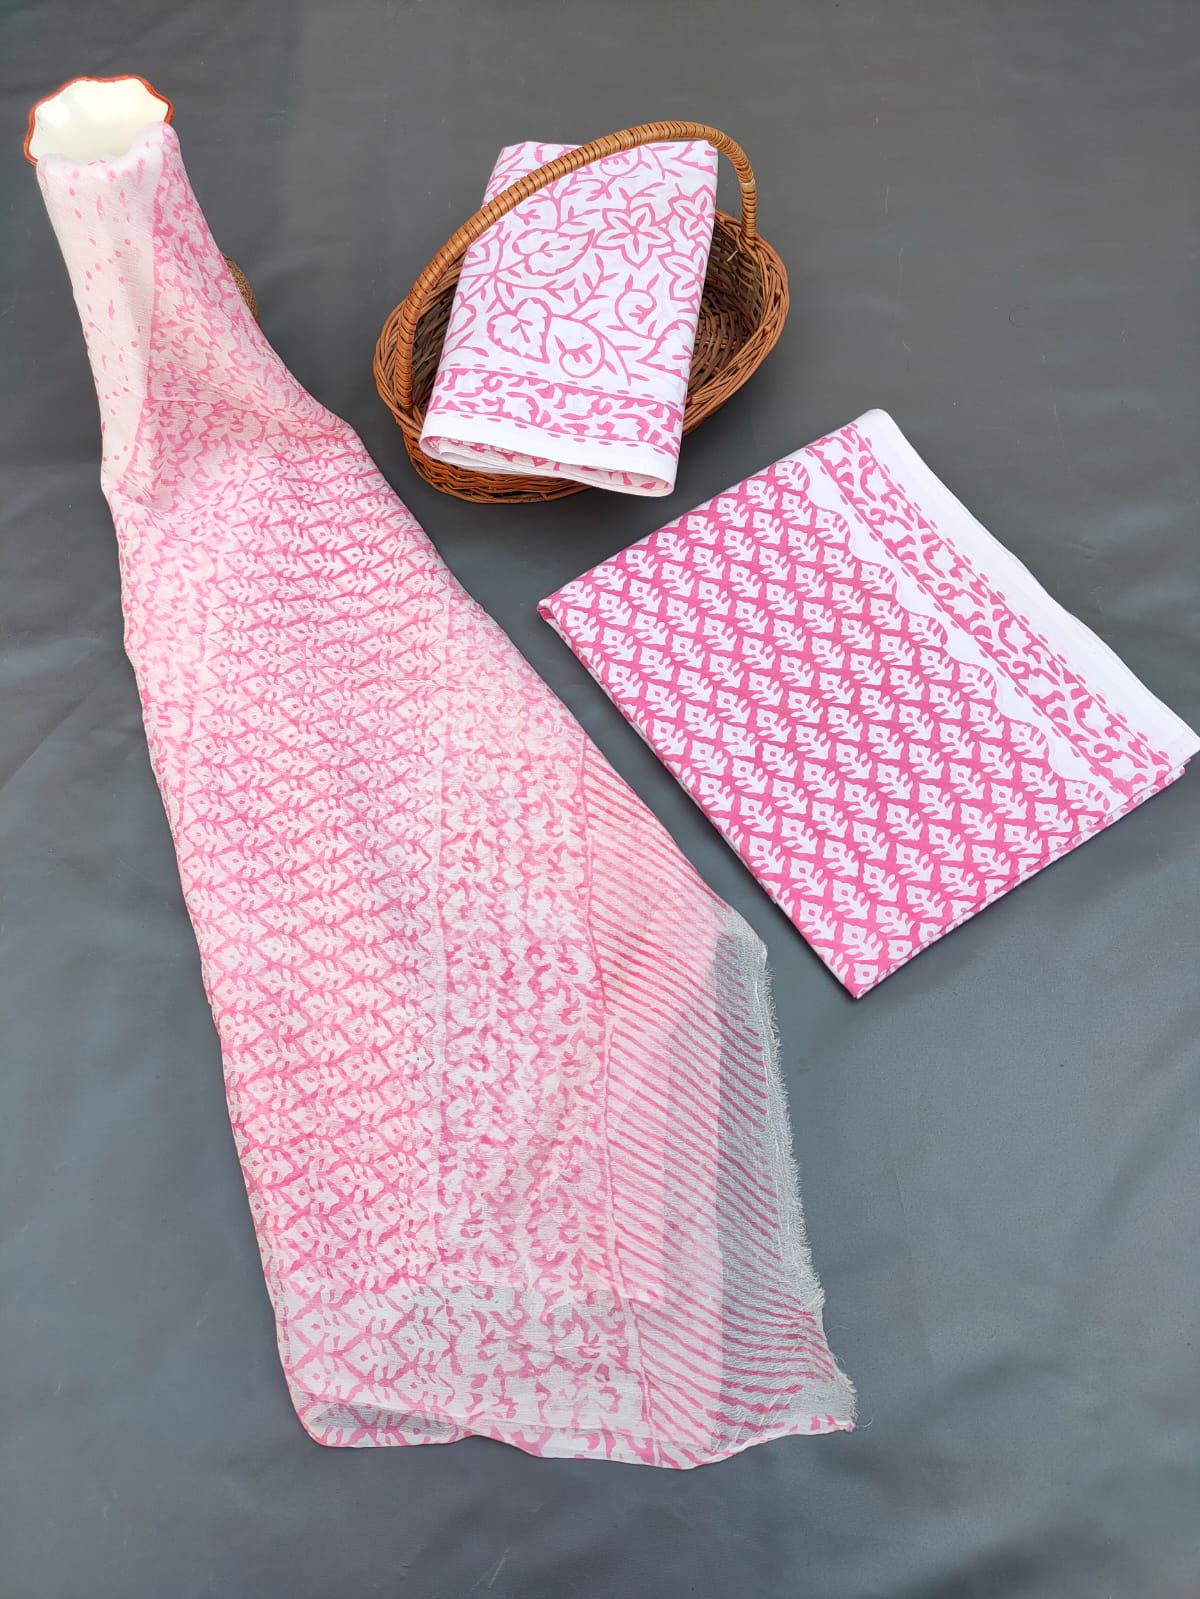 Jaipuri Unstitched Dress Material Hand Block Printed Cotton Suit With Chiffon Dupatta - JB713